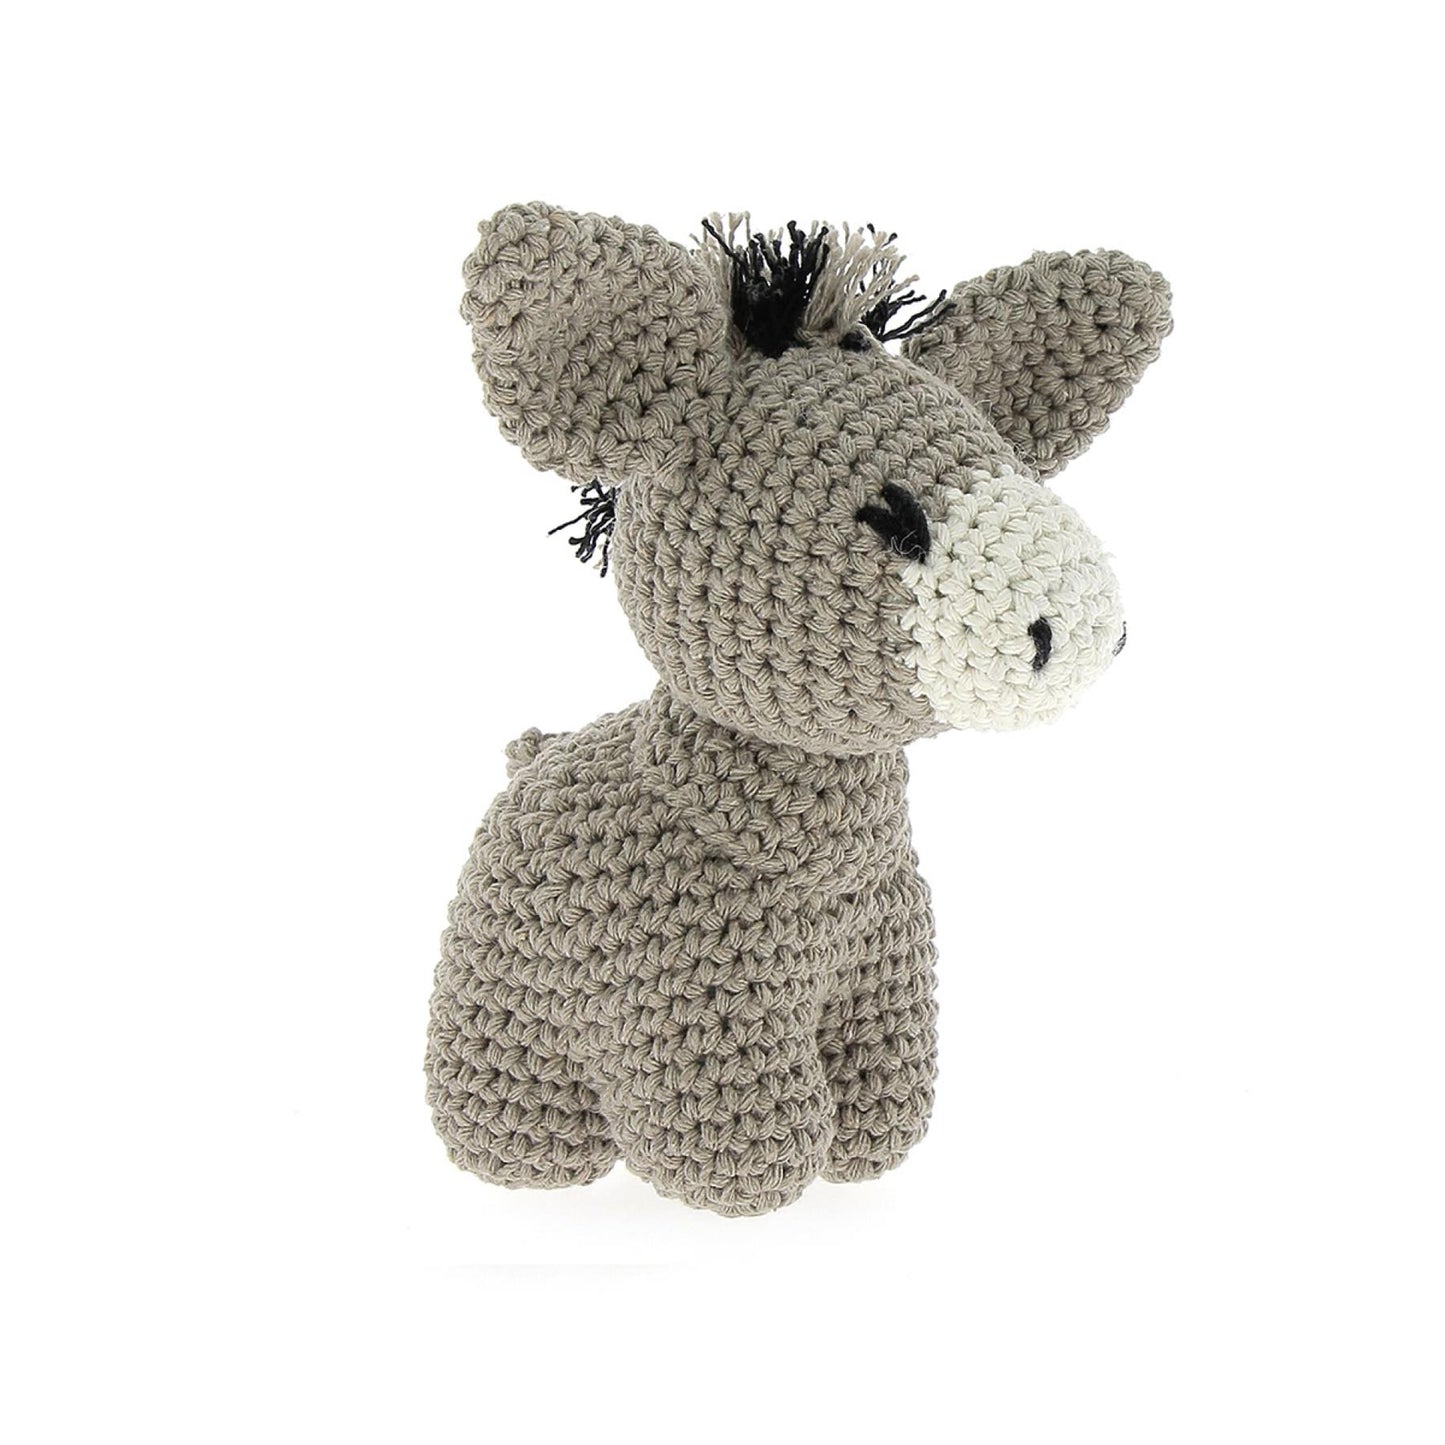 [Hoooked] PAK120310 Eco Barbante Milano Taupe Cotton Donkey Joe Crochet Amigurumi Kit